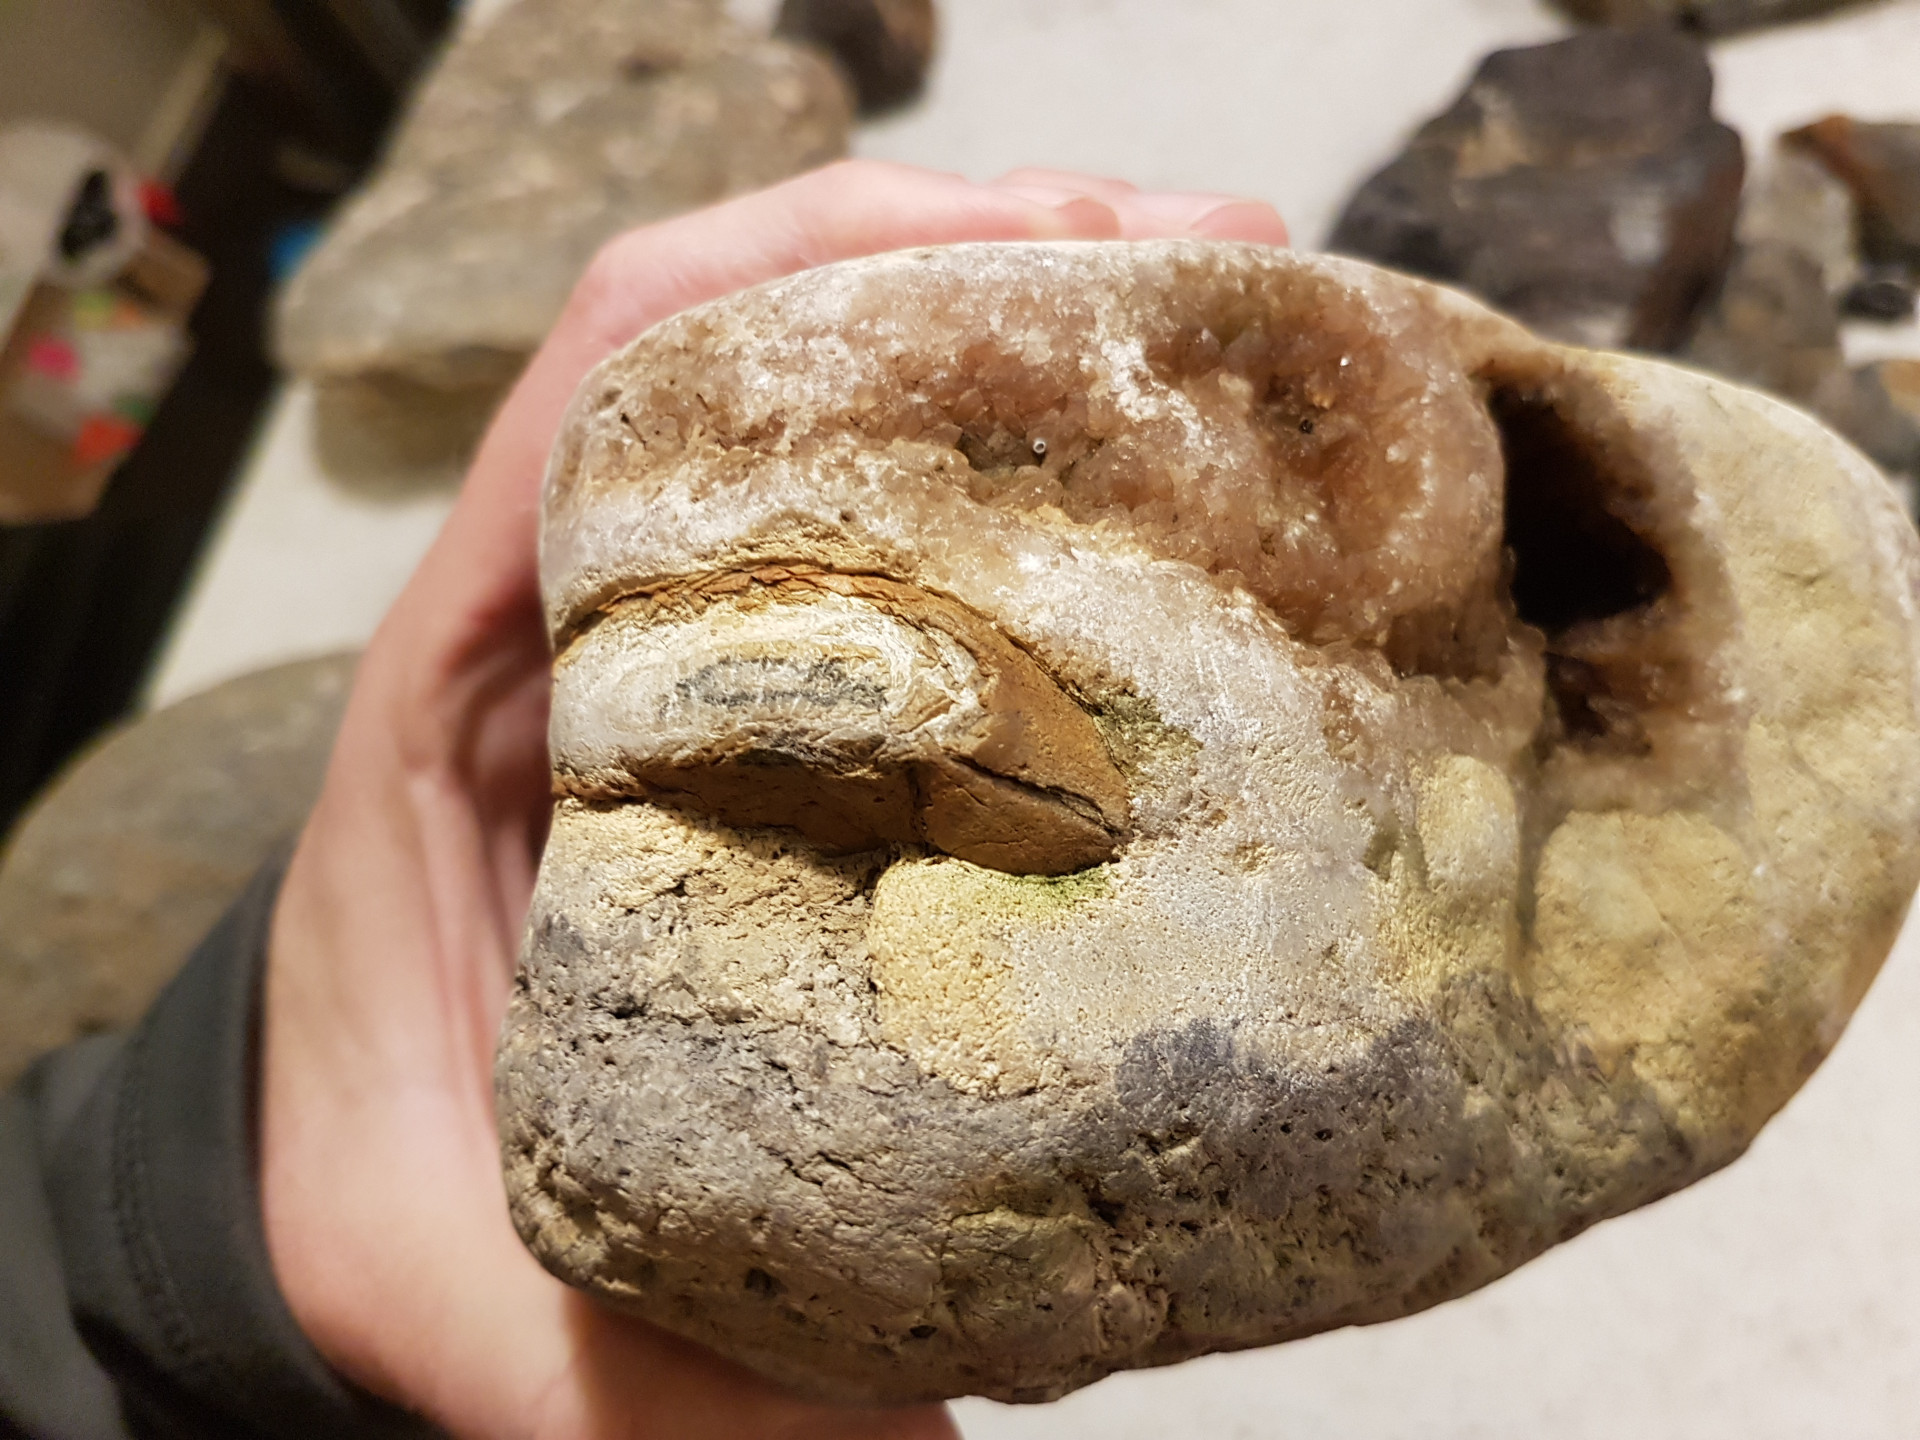 Hollow-looking Cretaceous bone